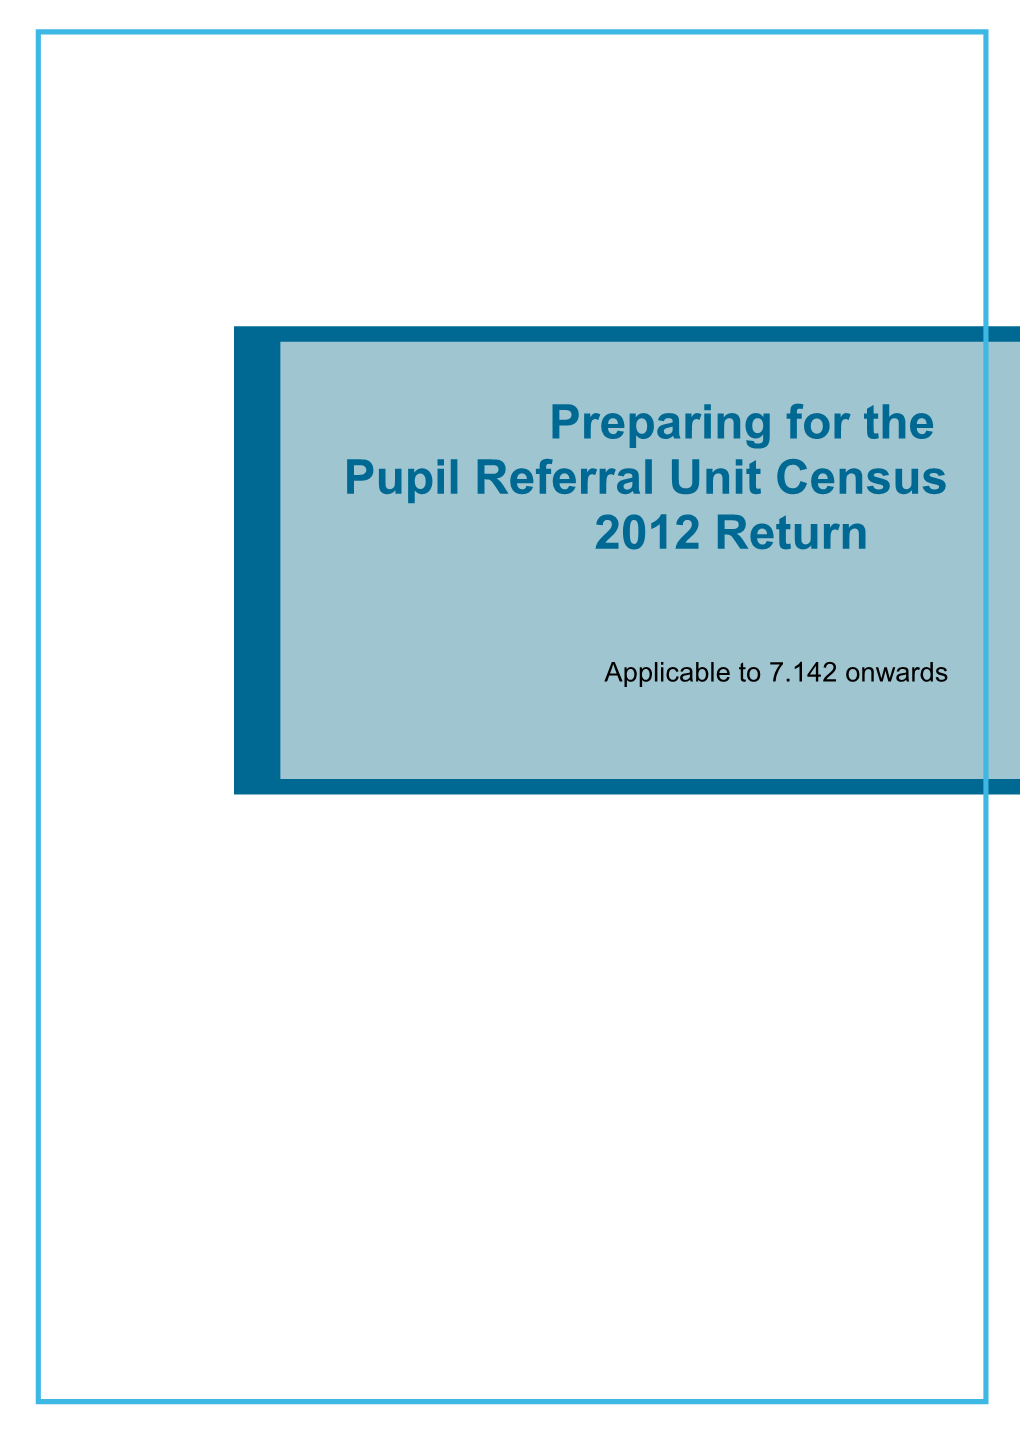 Preparing for the Pupil Referral Unit Census 2012 Return